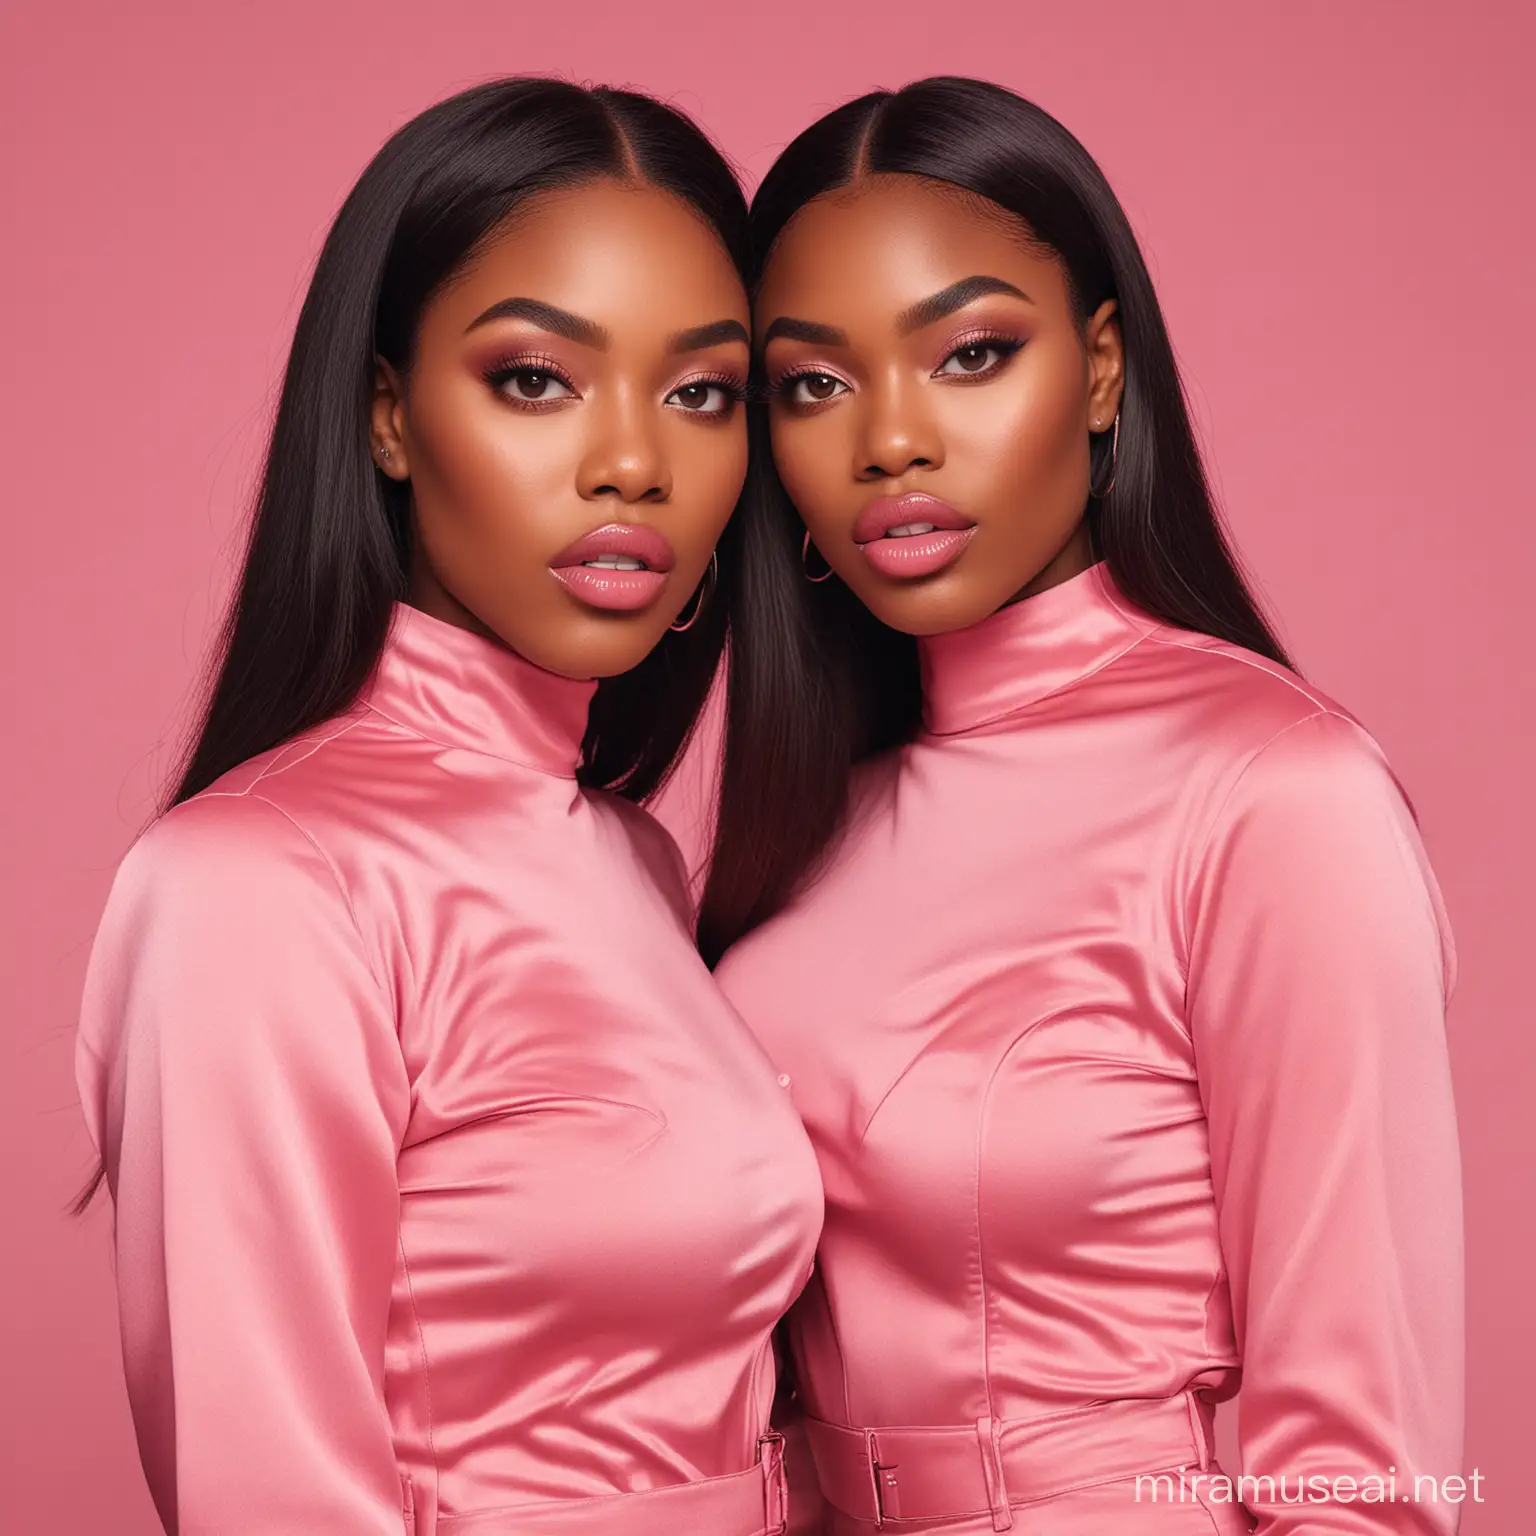 Confident African American Instagram Baddies in Pink Fashion Campaign Portrait